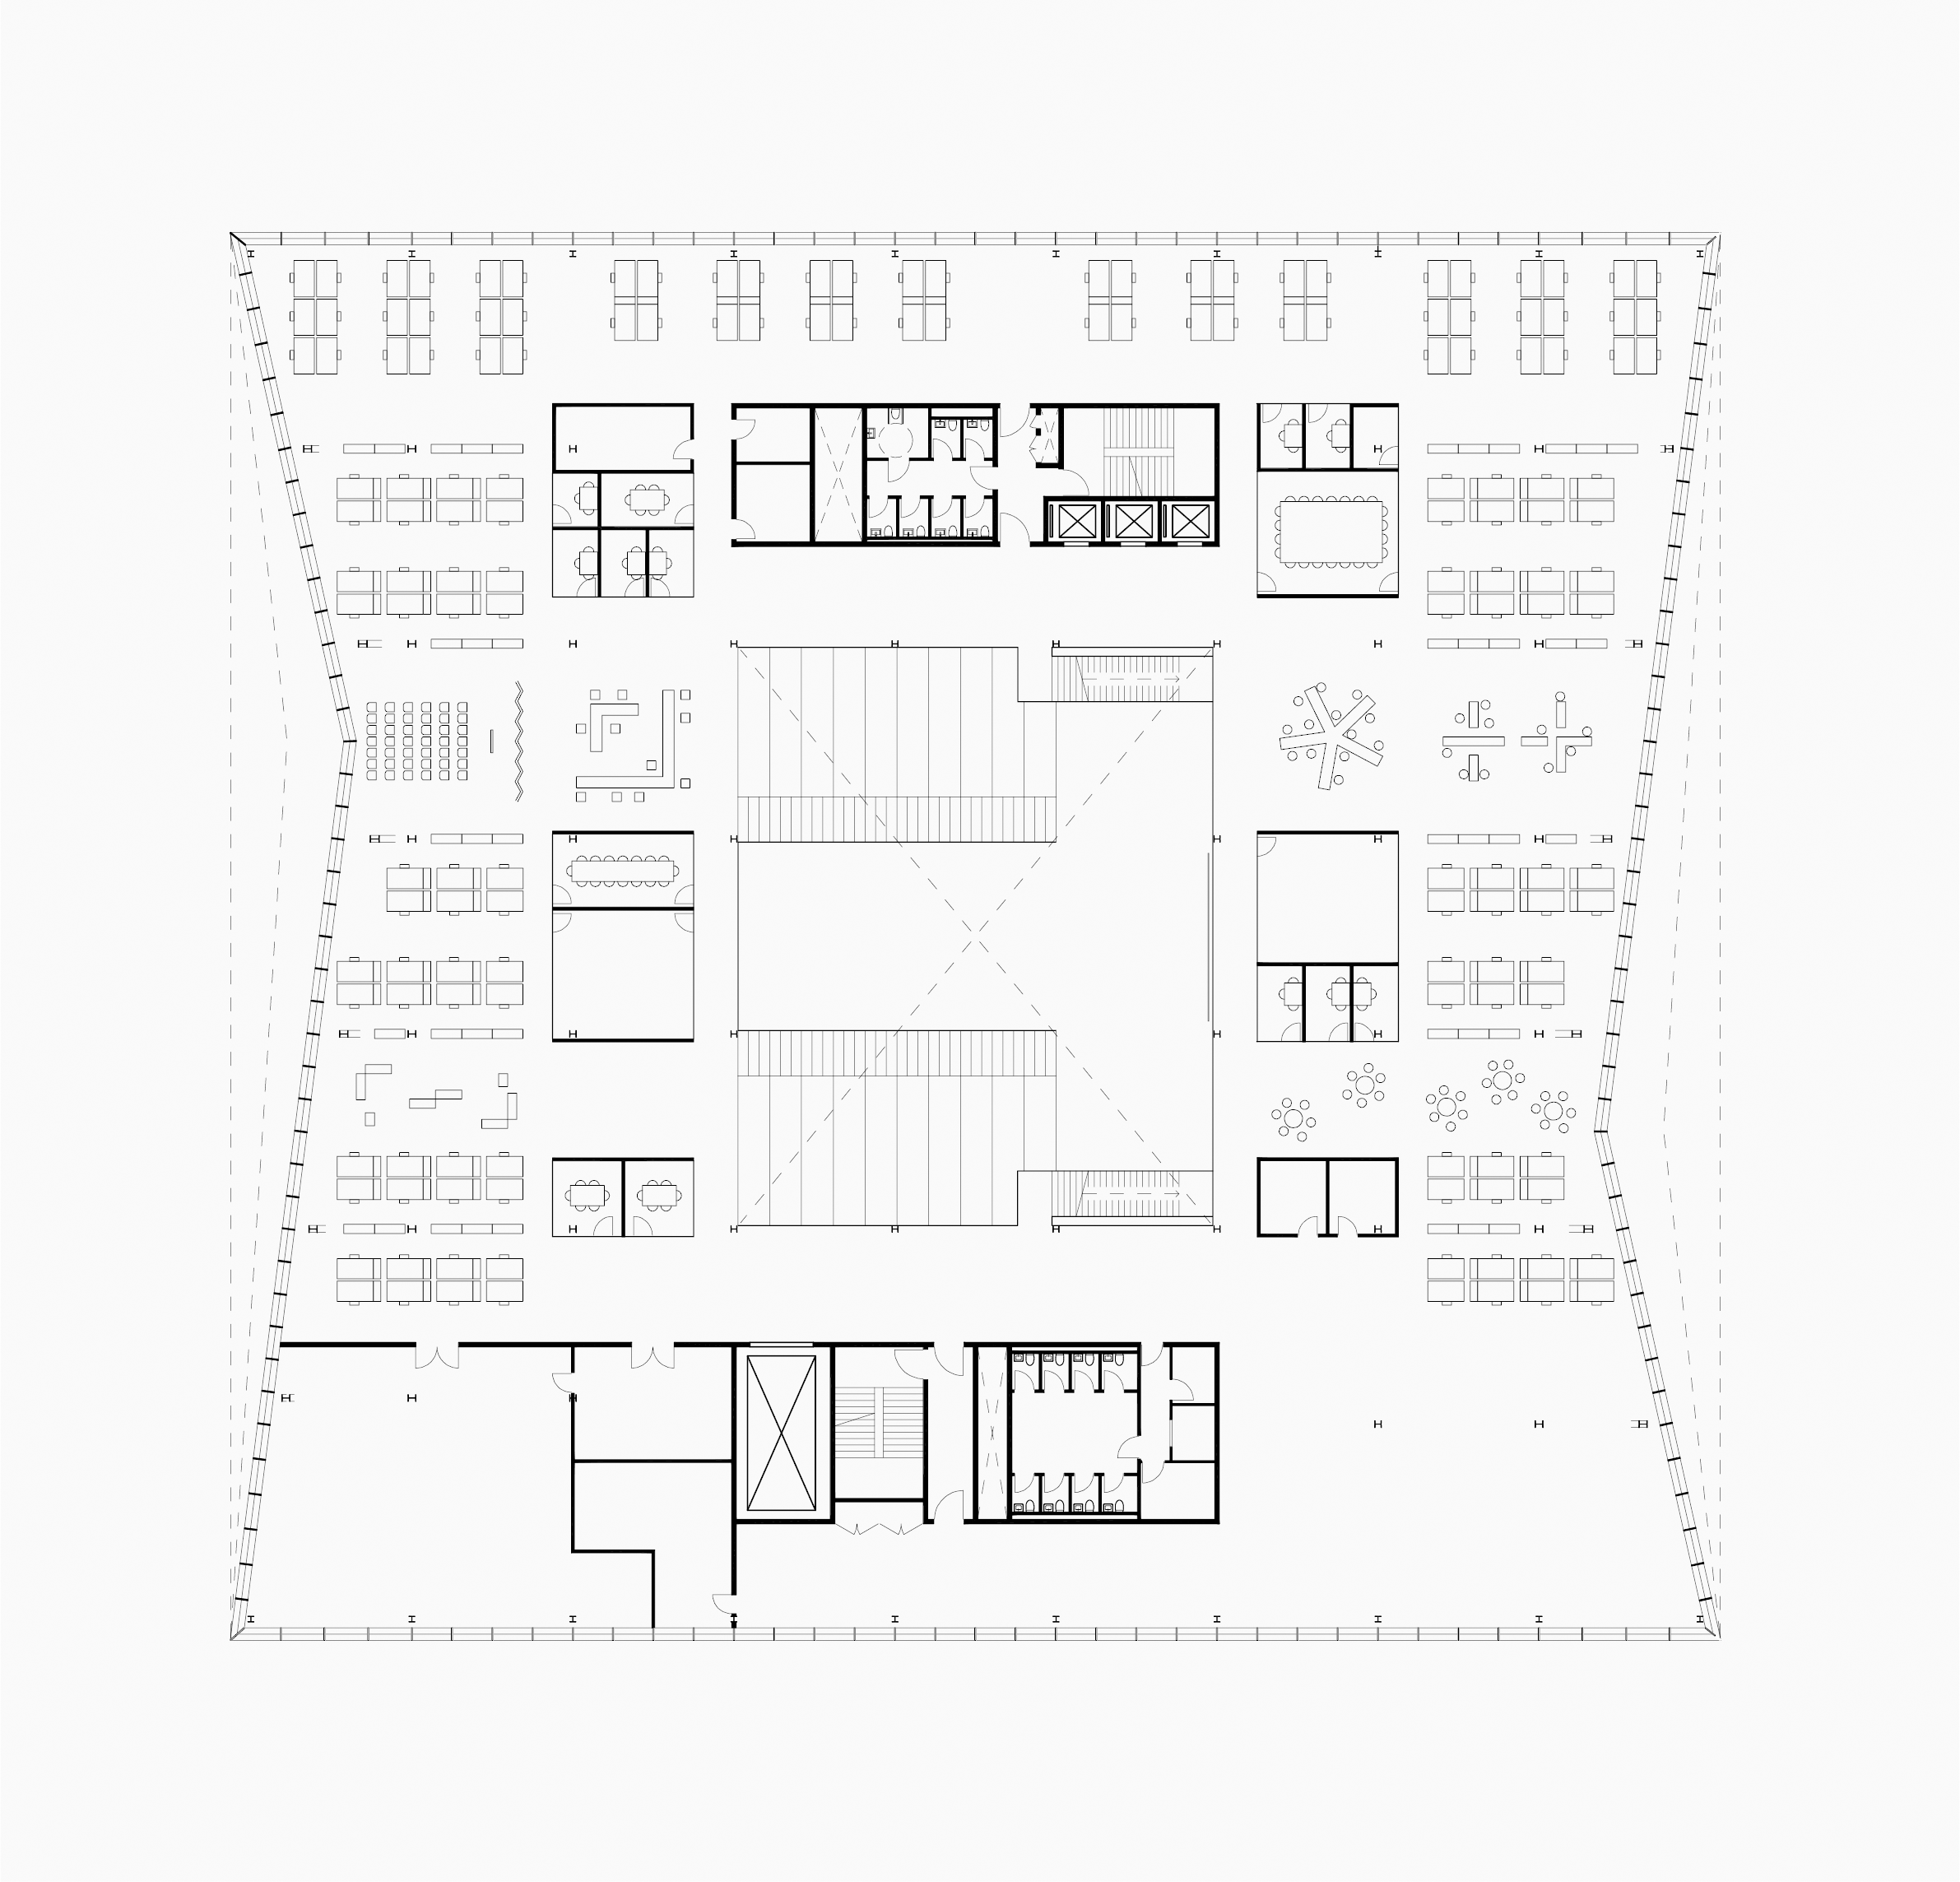 270 cobe geely design centre floor